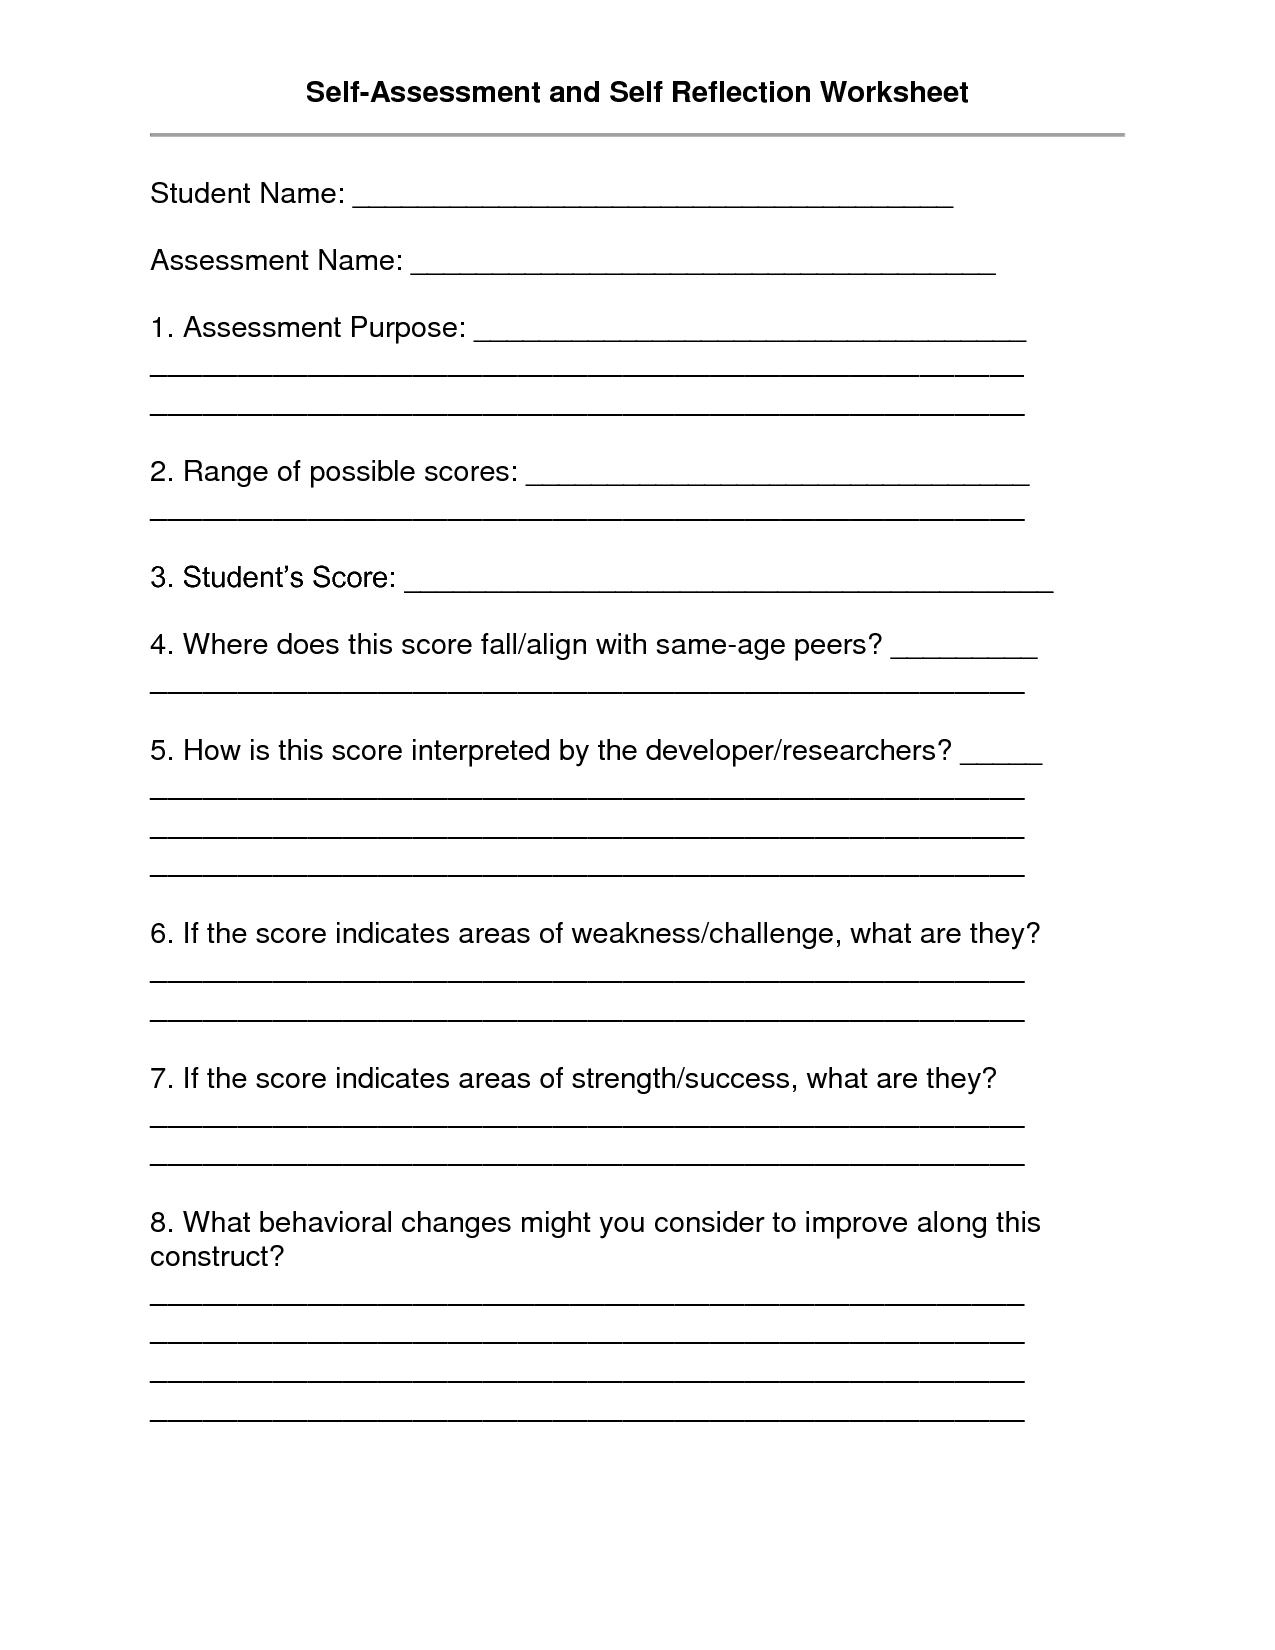 Student Self-Assessment Reflection Worksheets Image